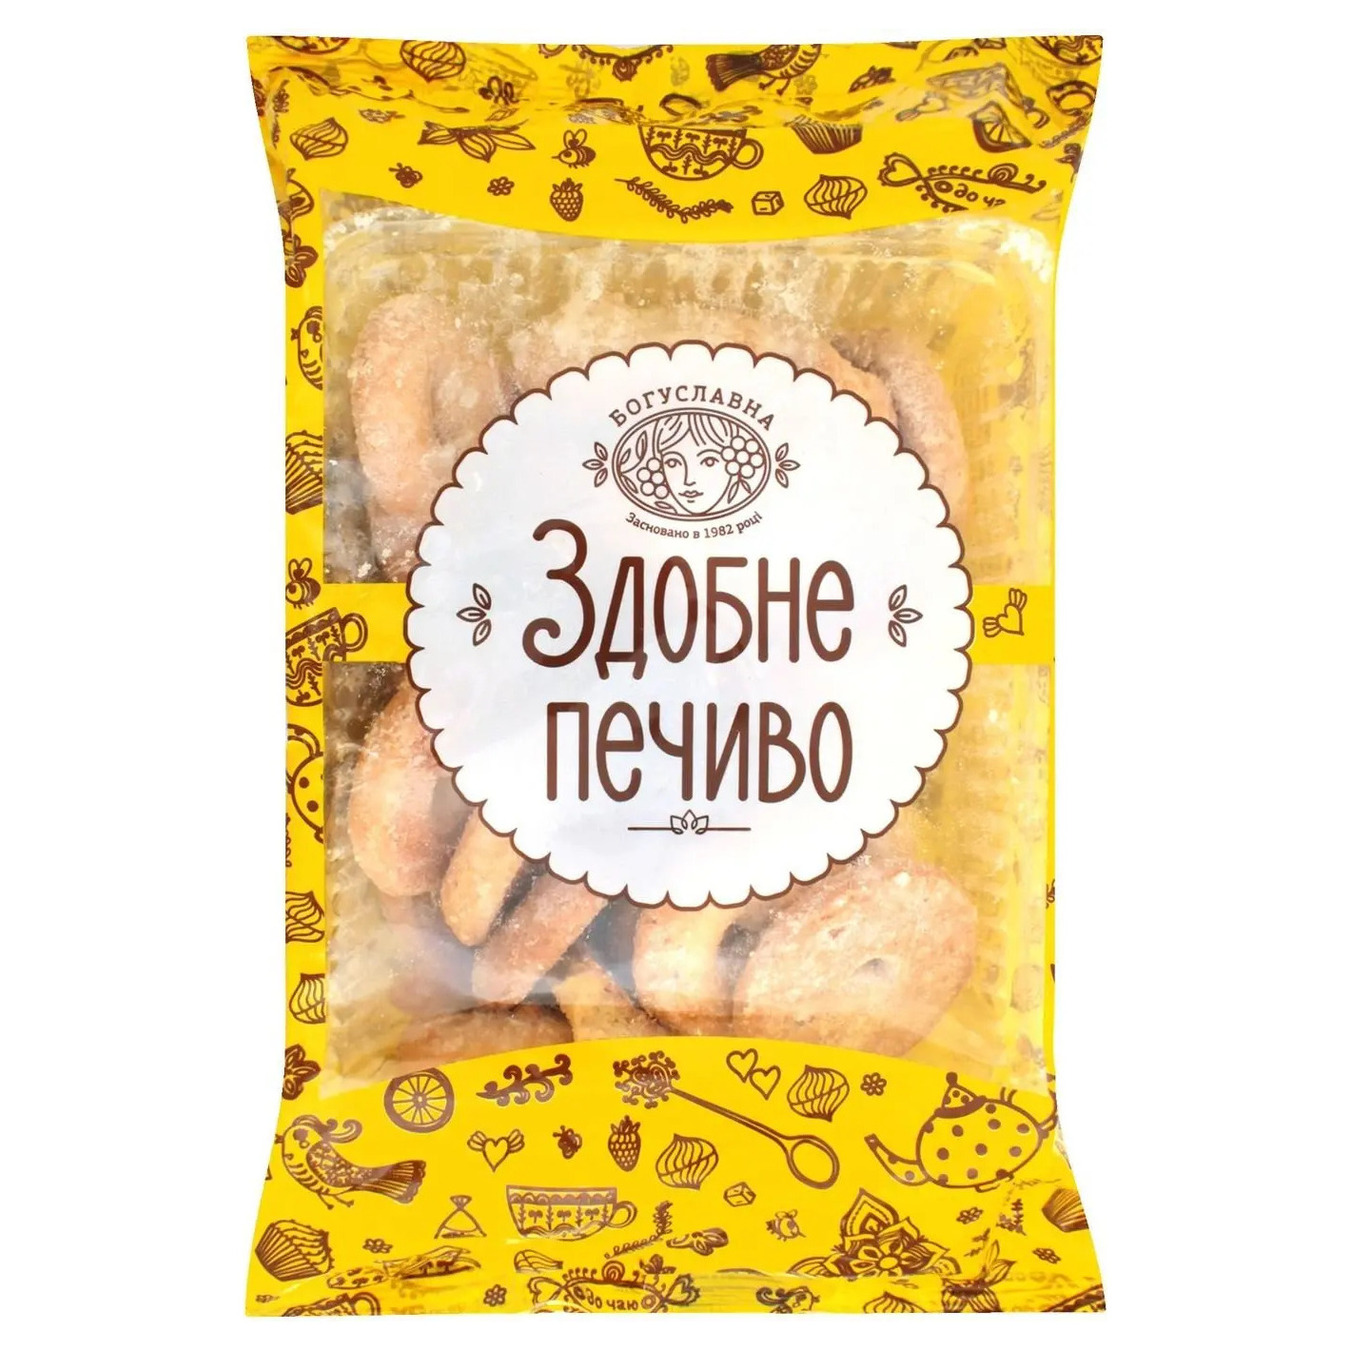 Bohuslavna cookies buttery corn rings 300g